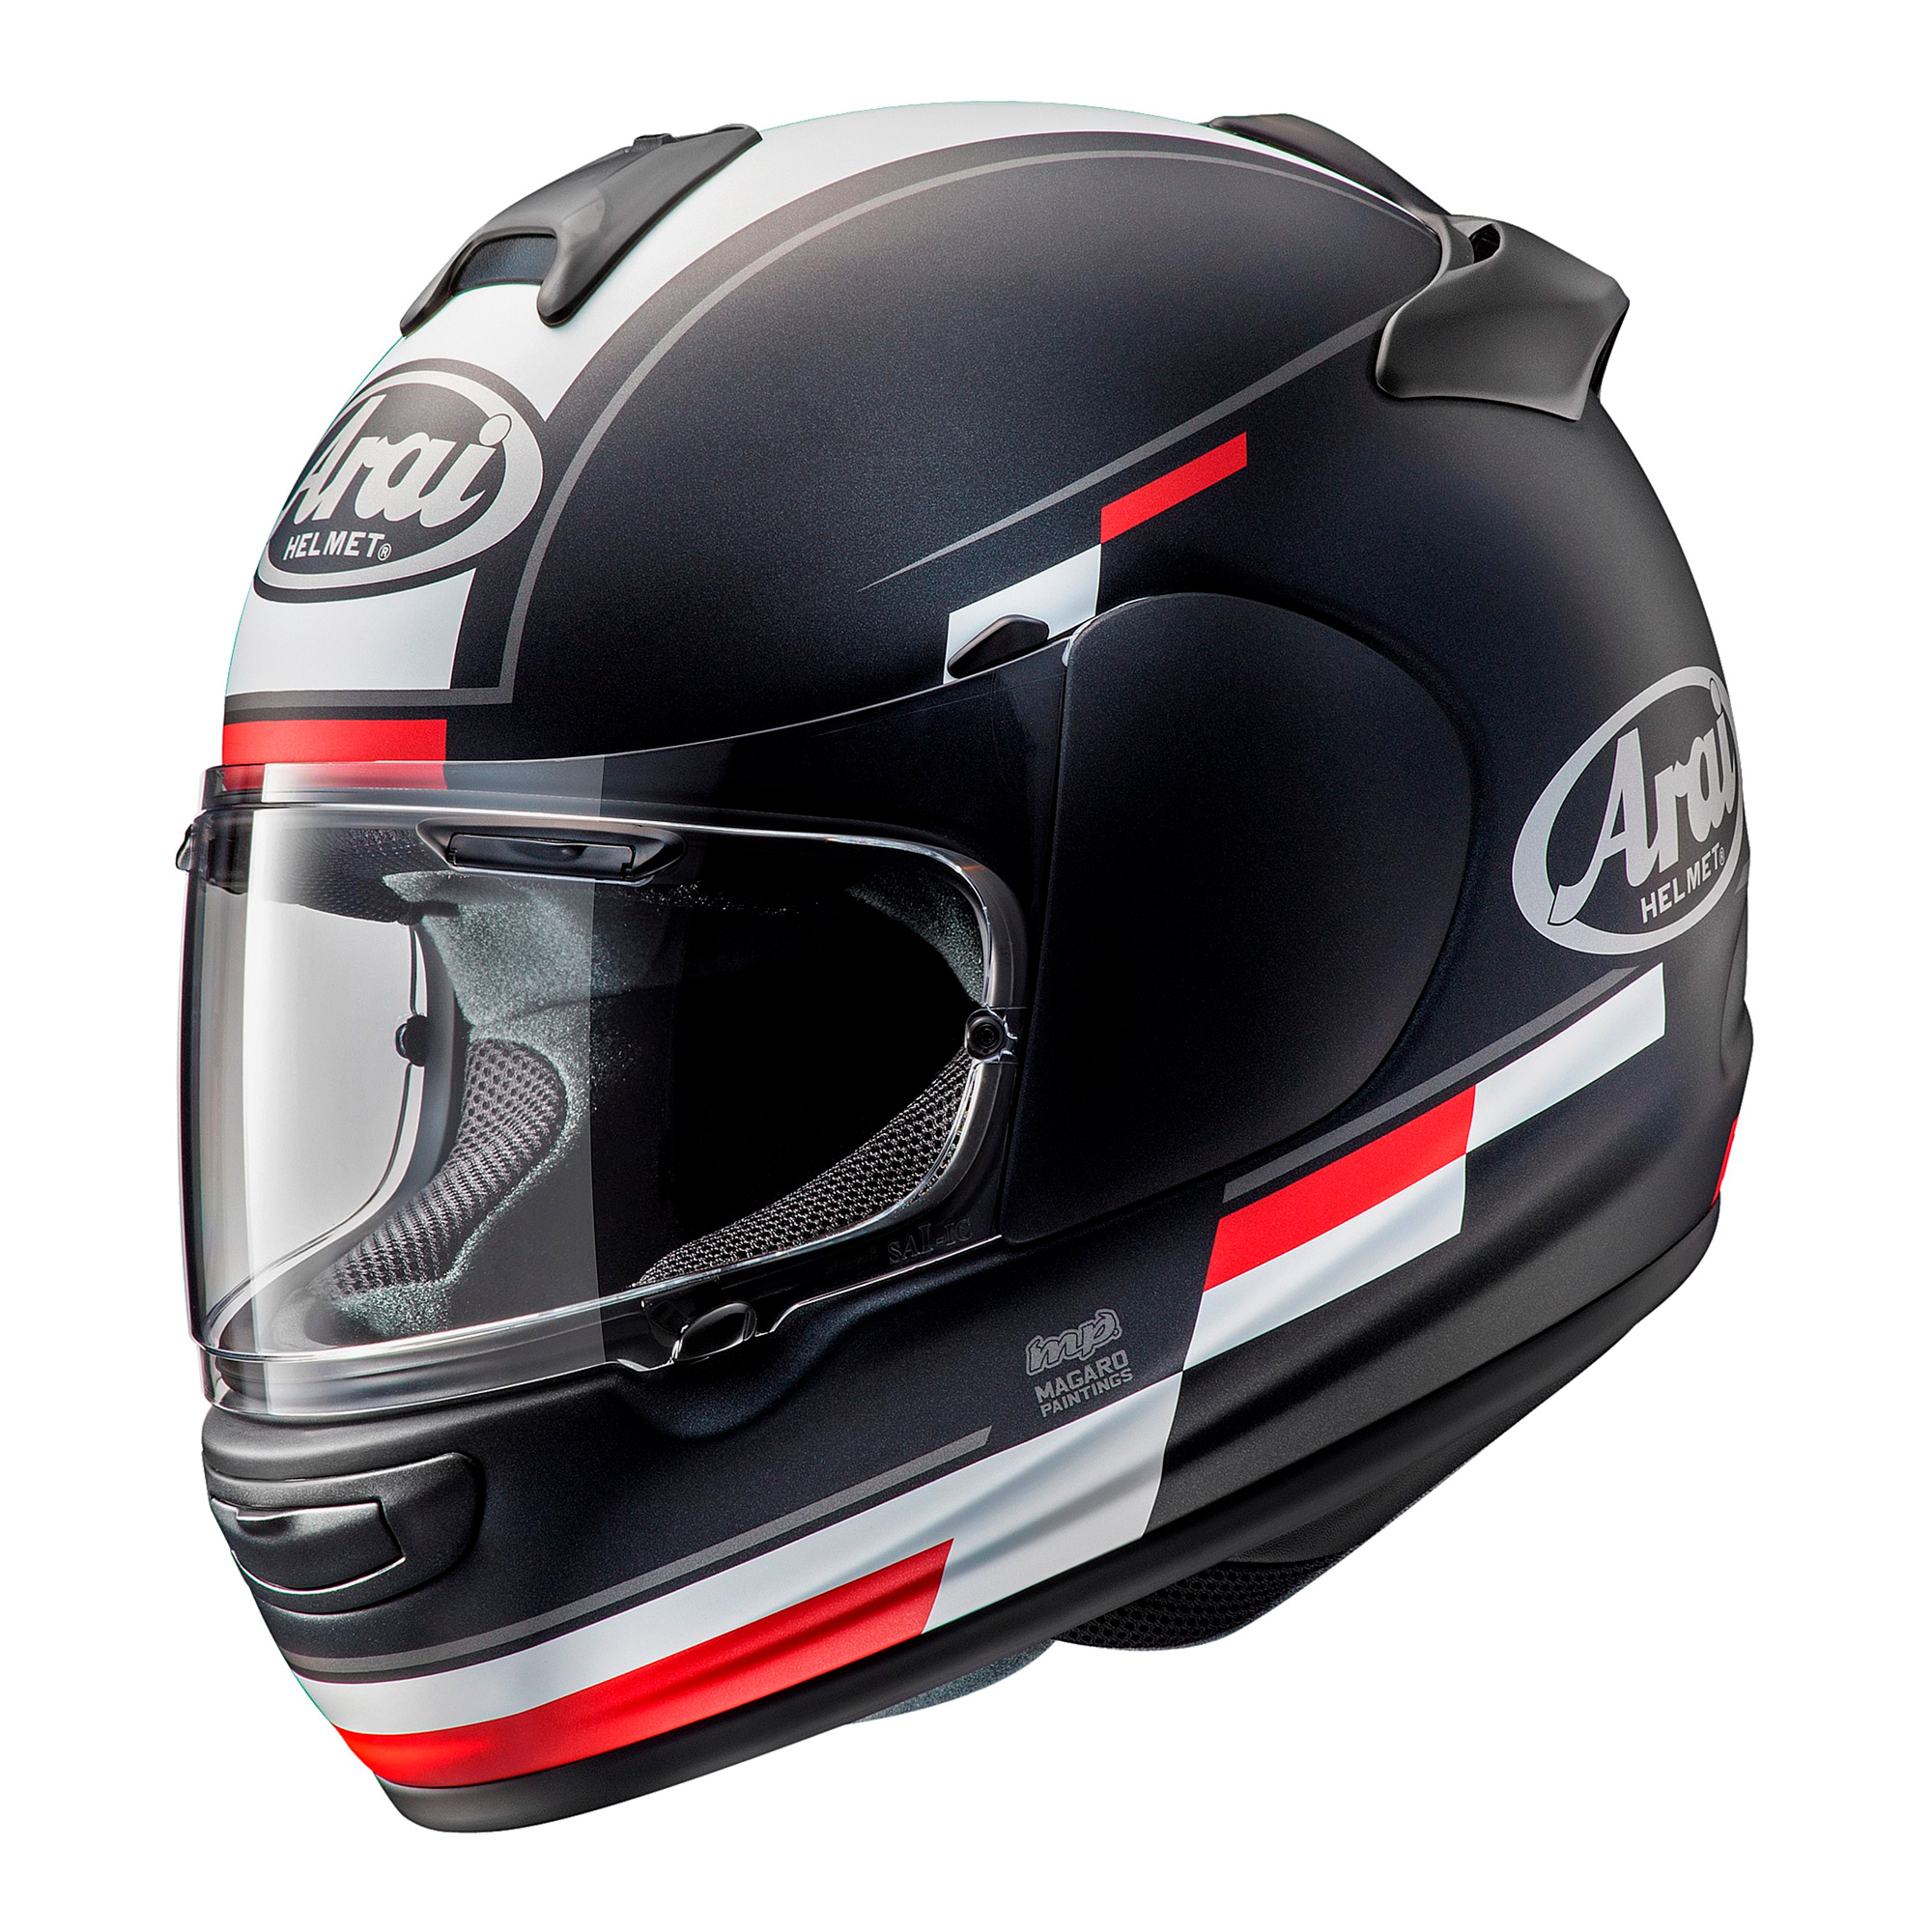 Arai Debut Graphic ECE 22-05 Certified Motorbike Rider Helmet | eBay